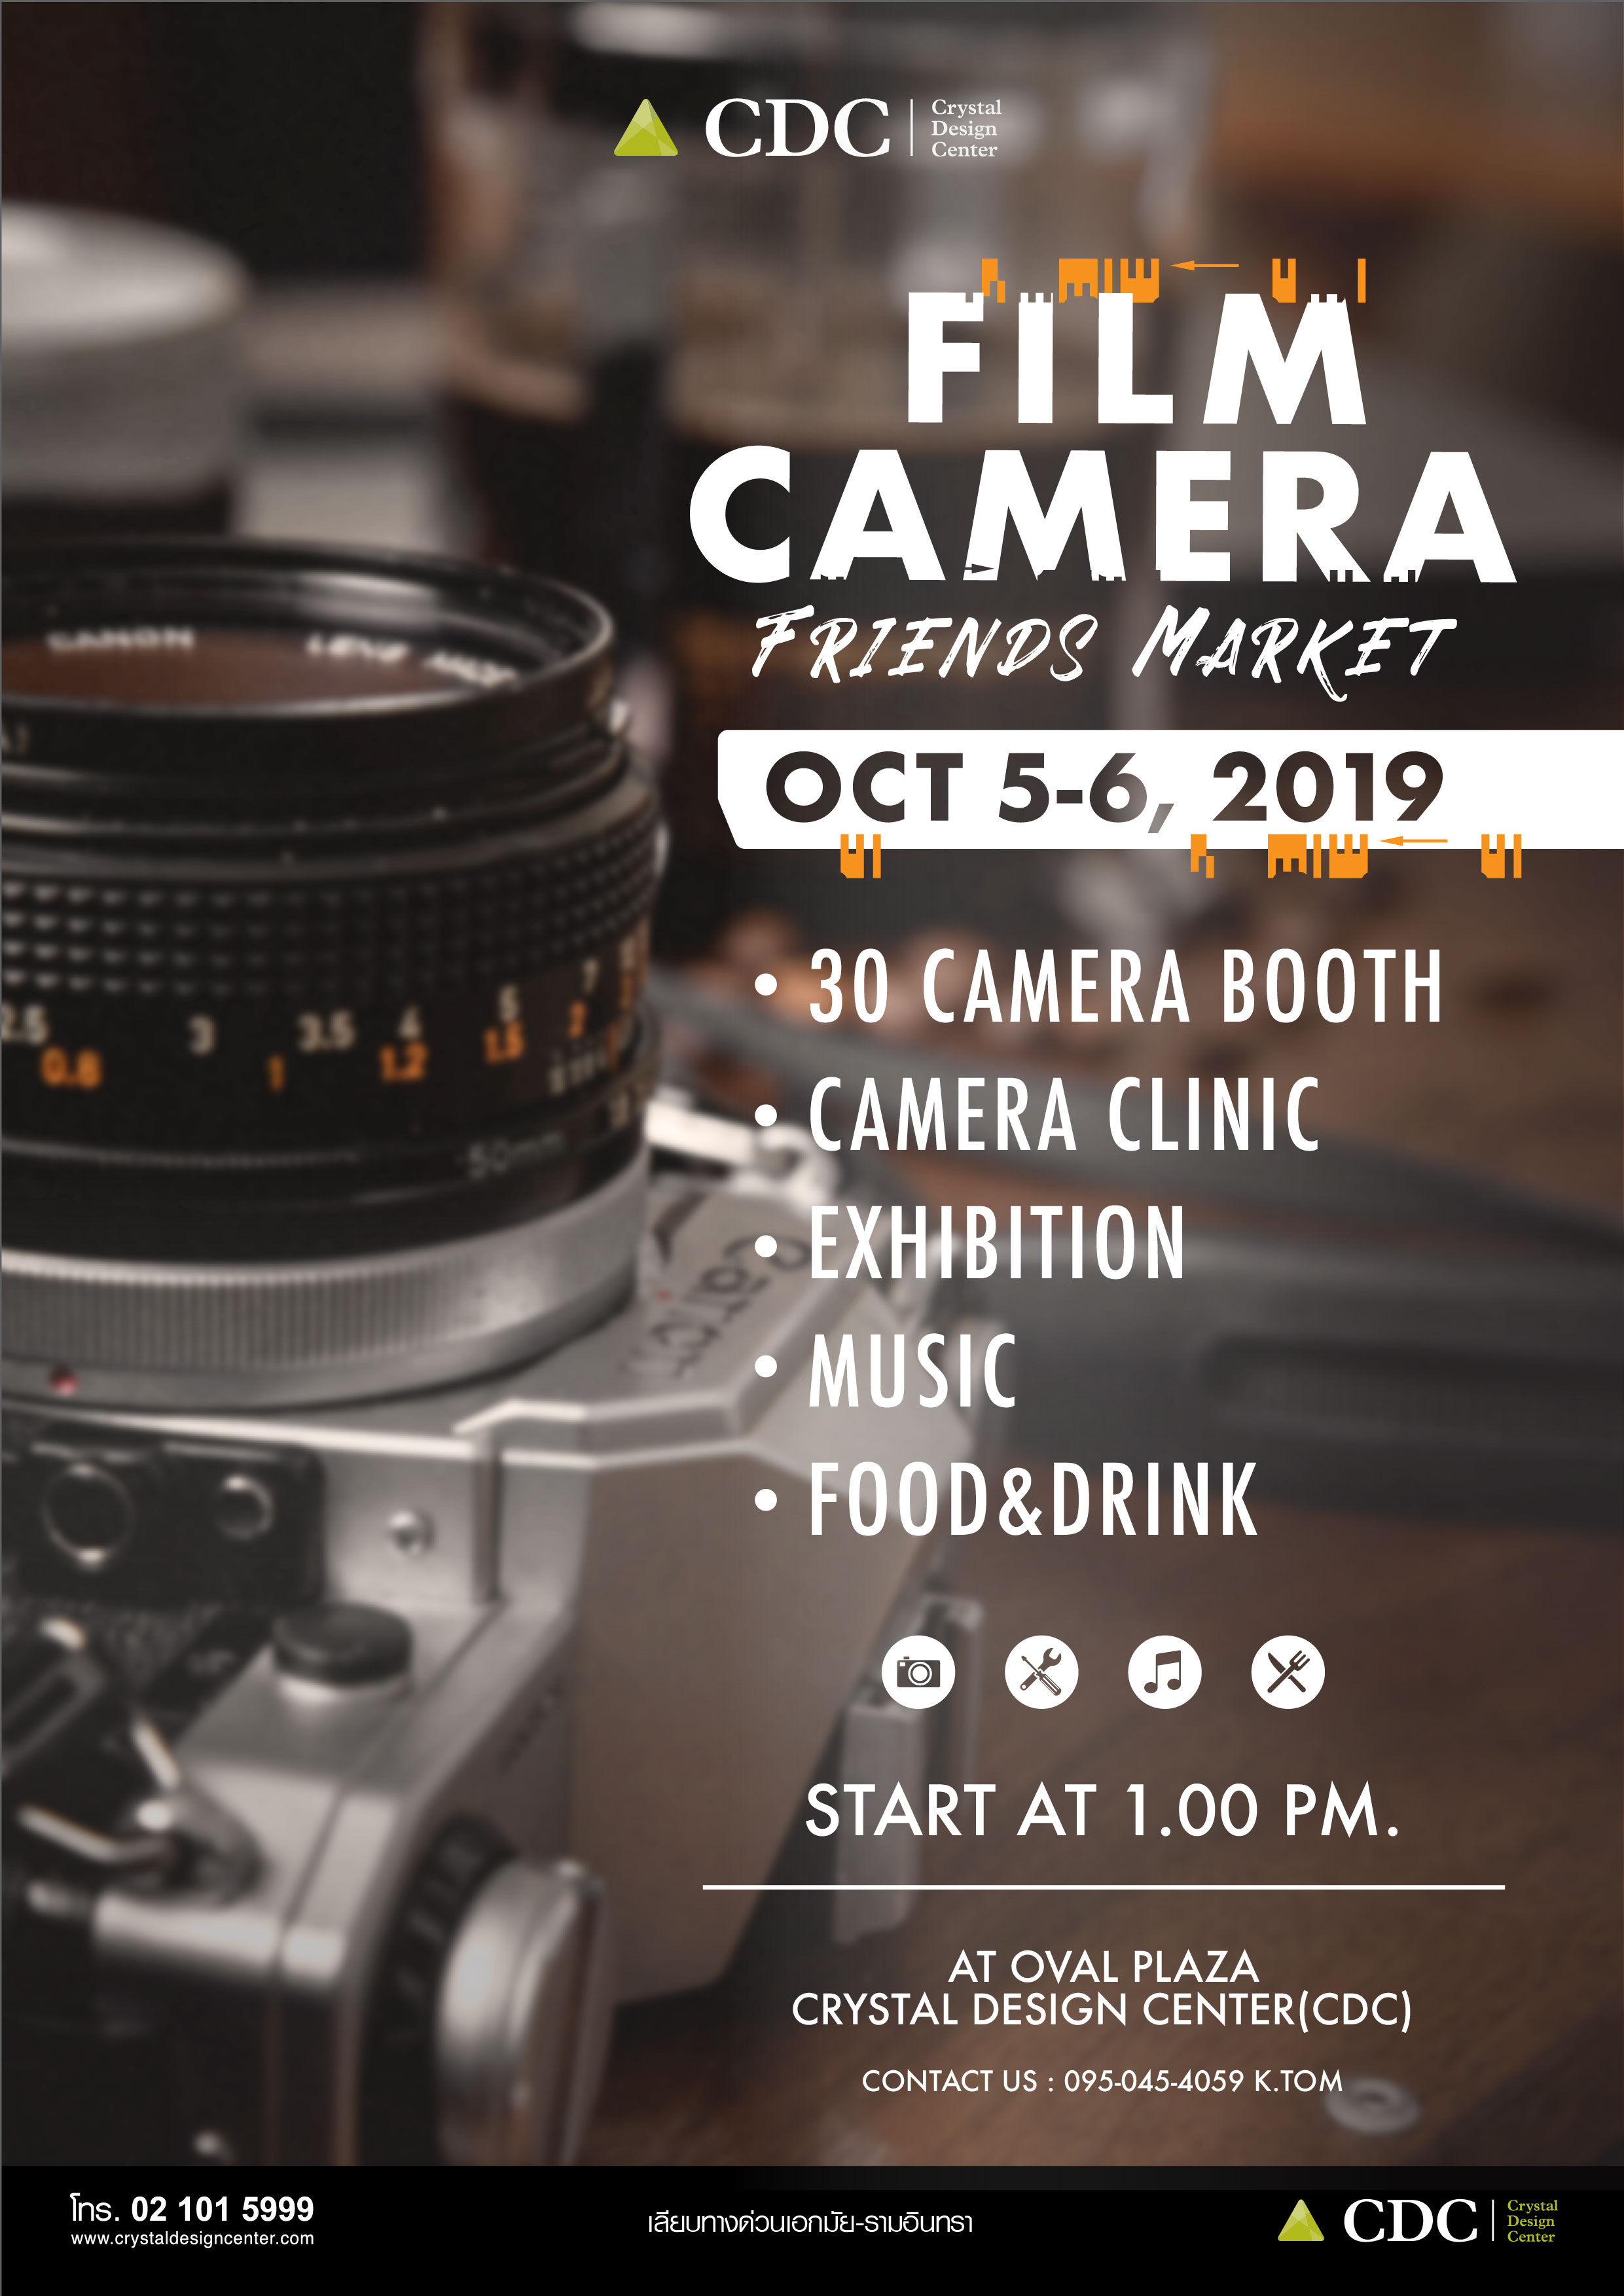 Film Camera Friends Market by CDC